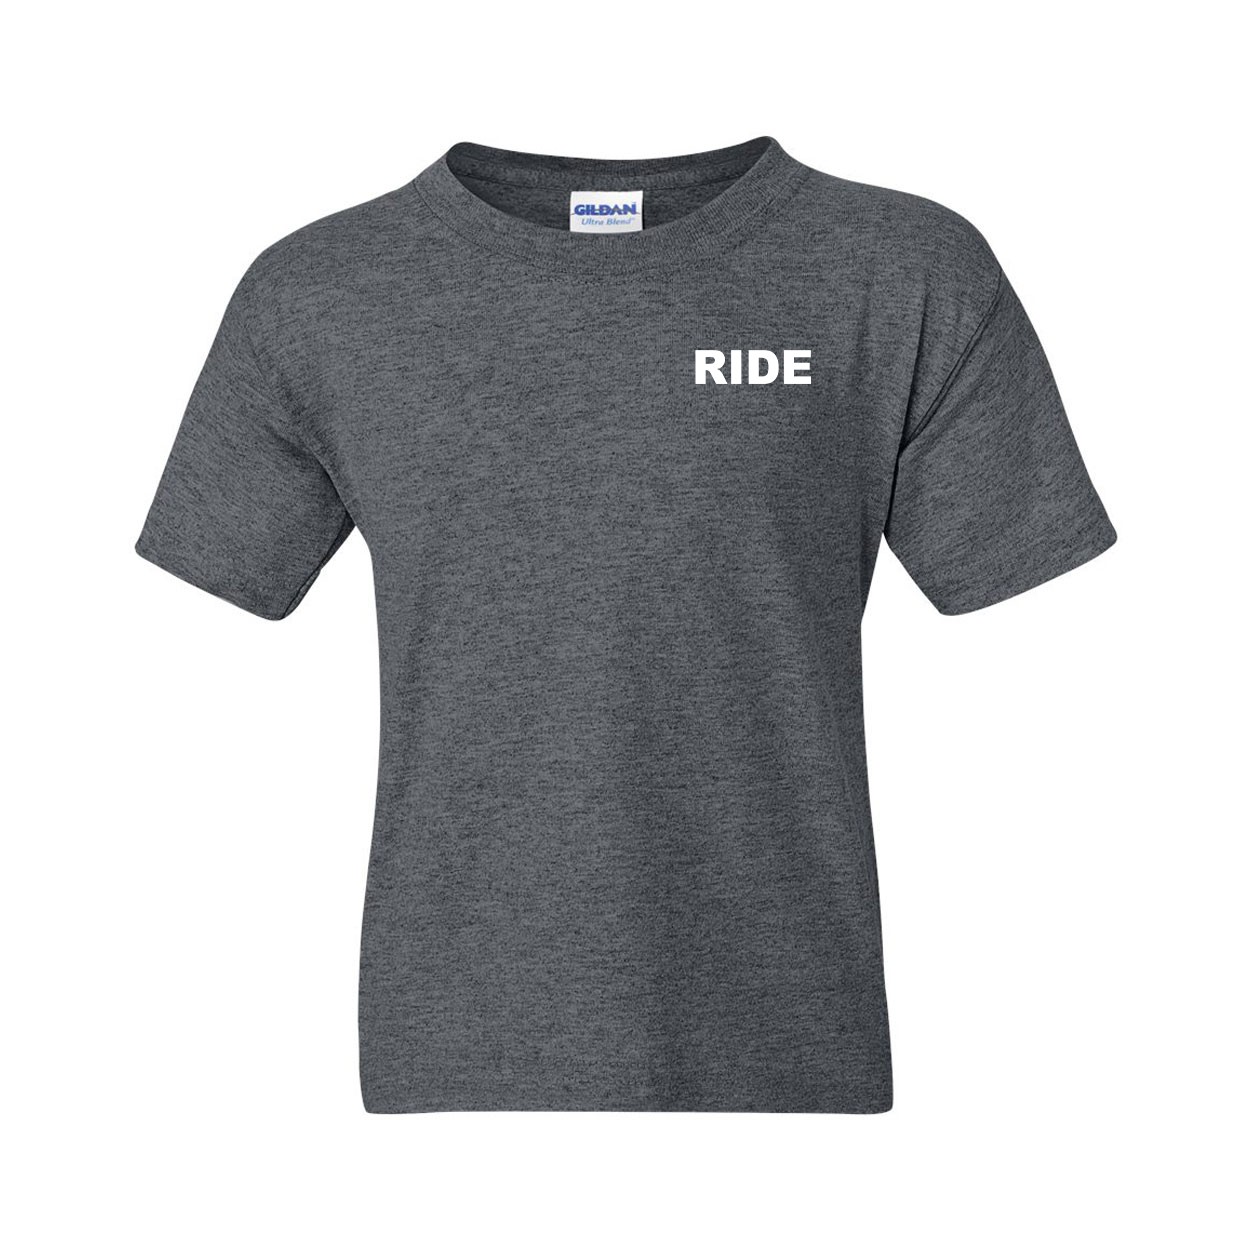 Ride Brand Logo Night Out Youth T-Shirt Dark Heather Gray (White Logo)